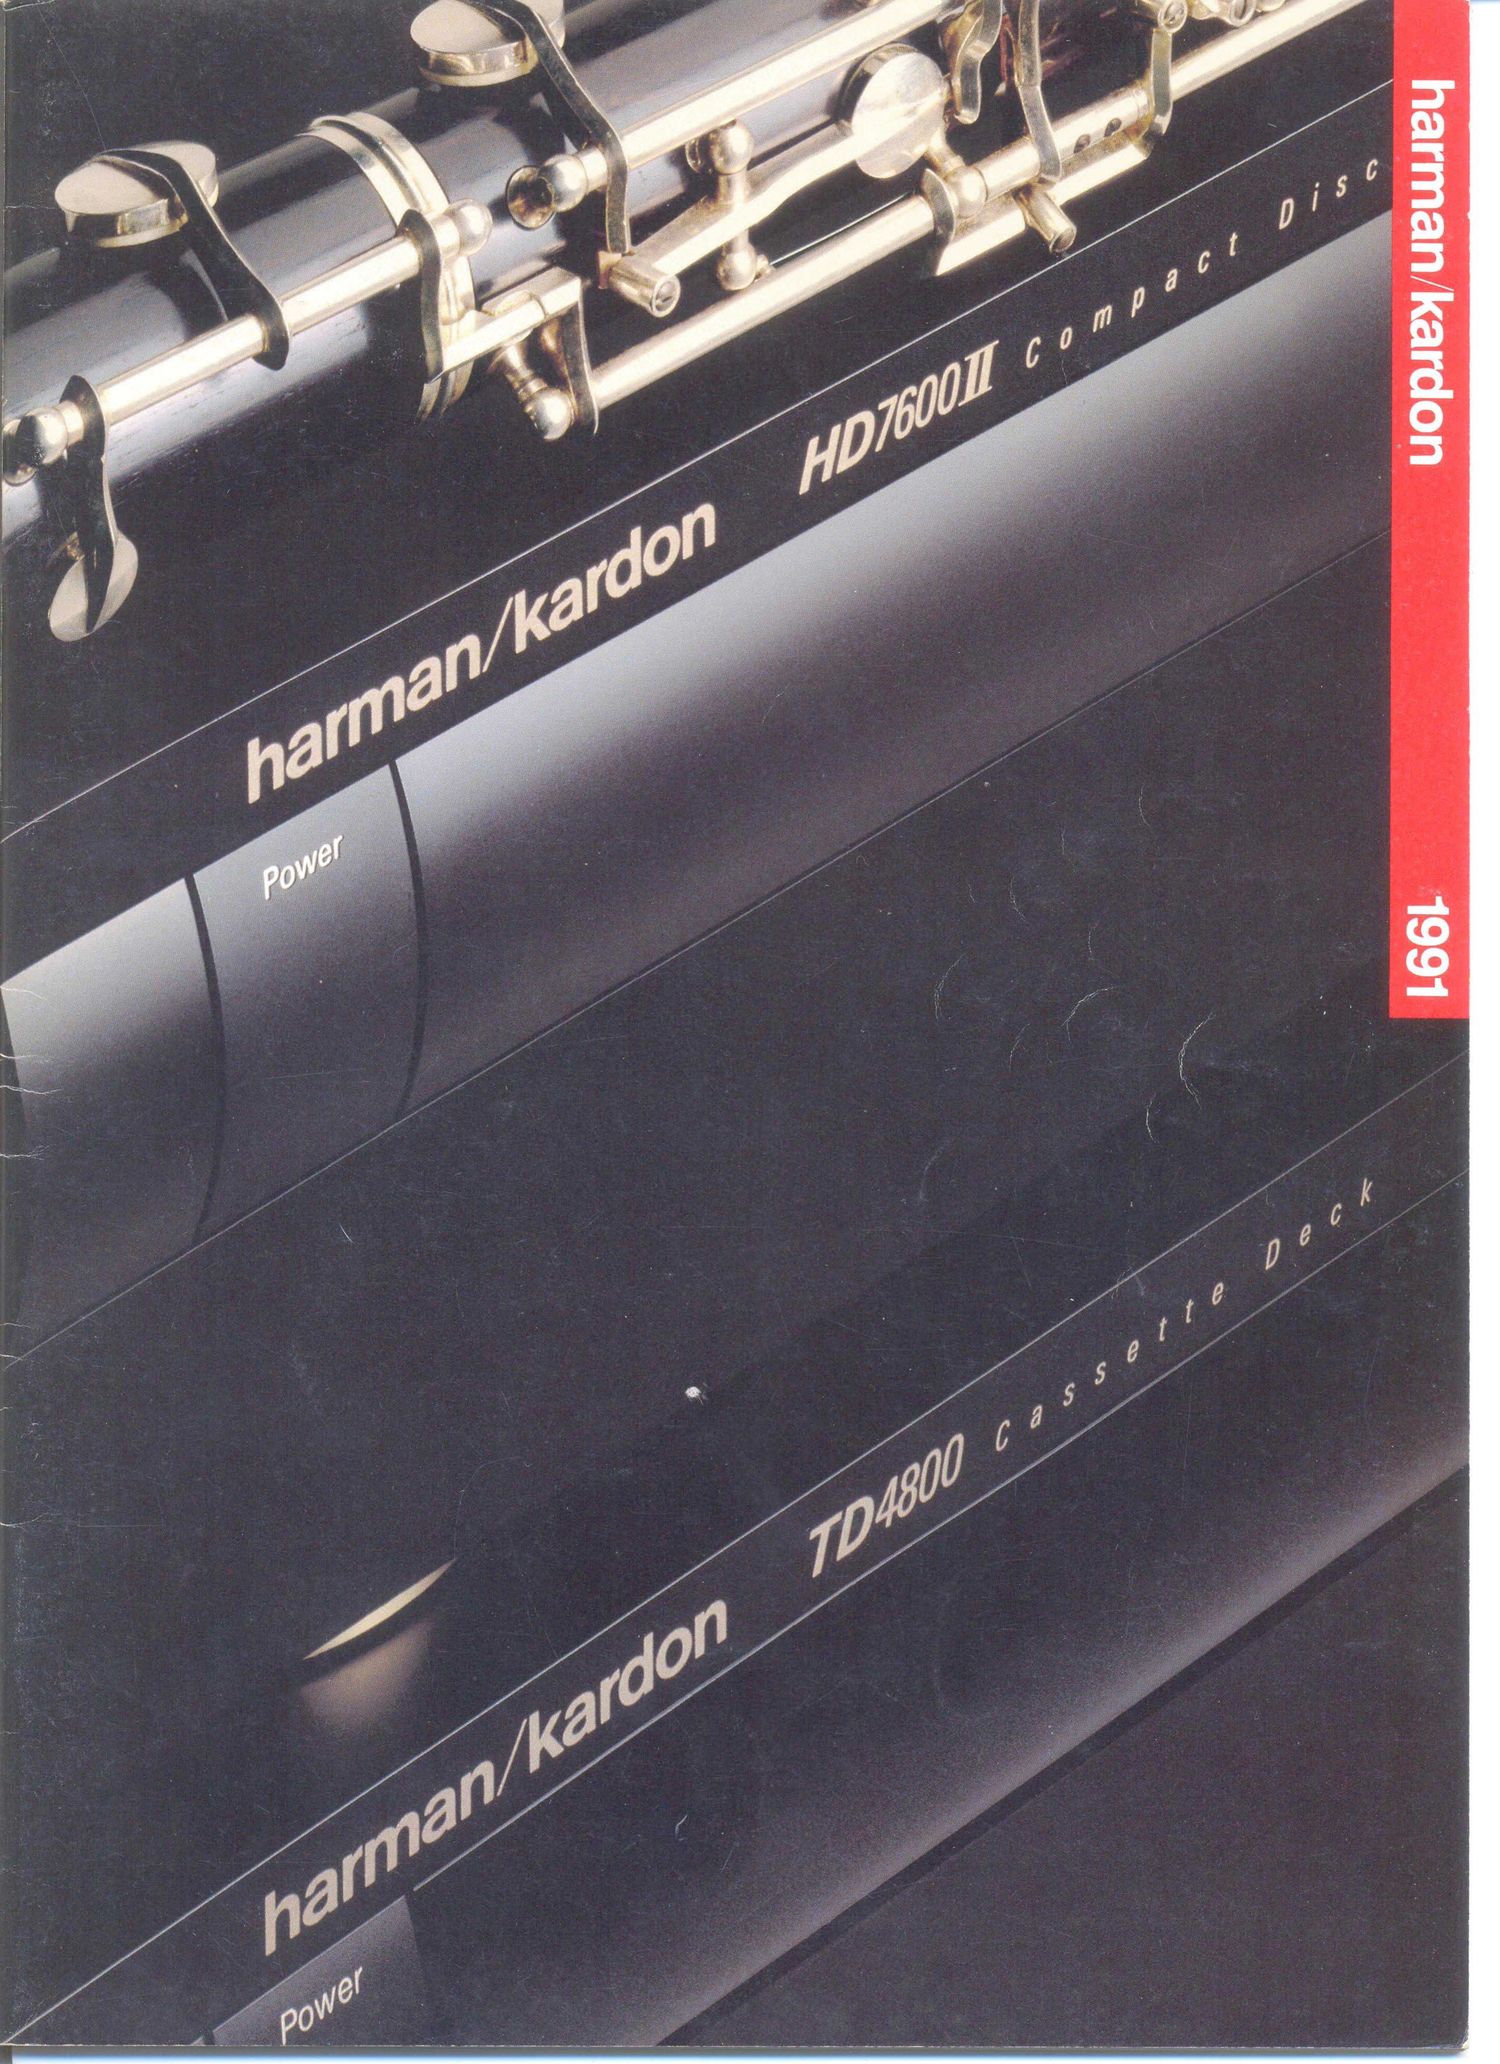 Harman Kardon Catalogue 1991